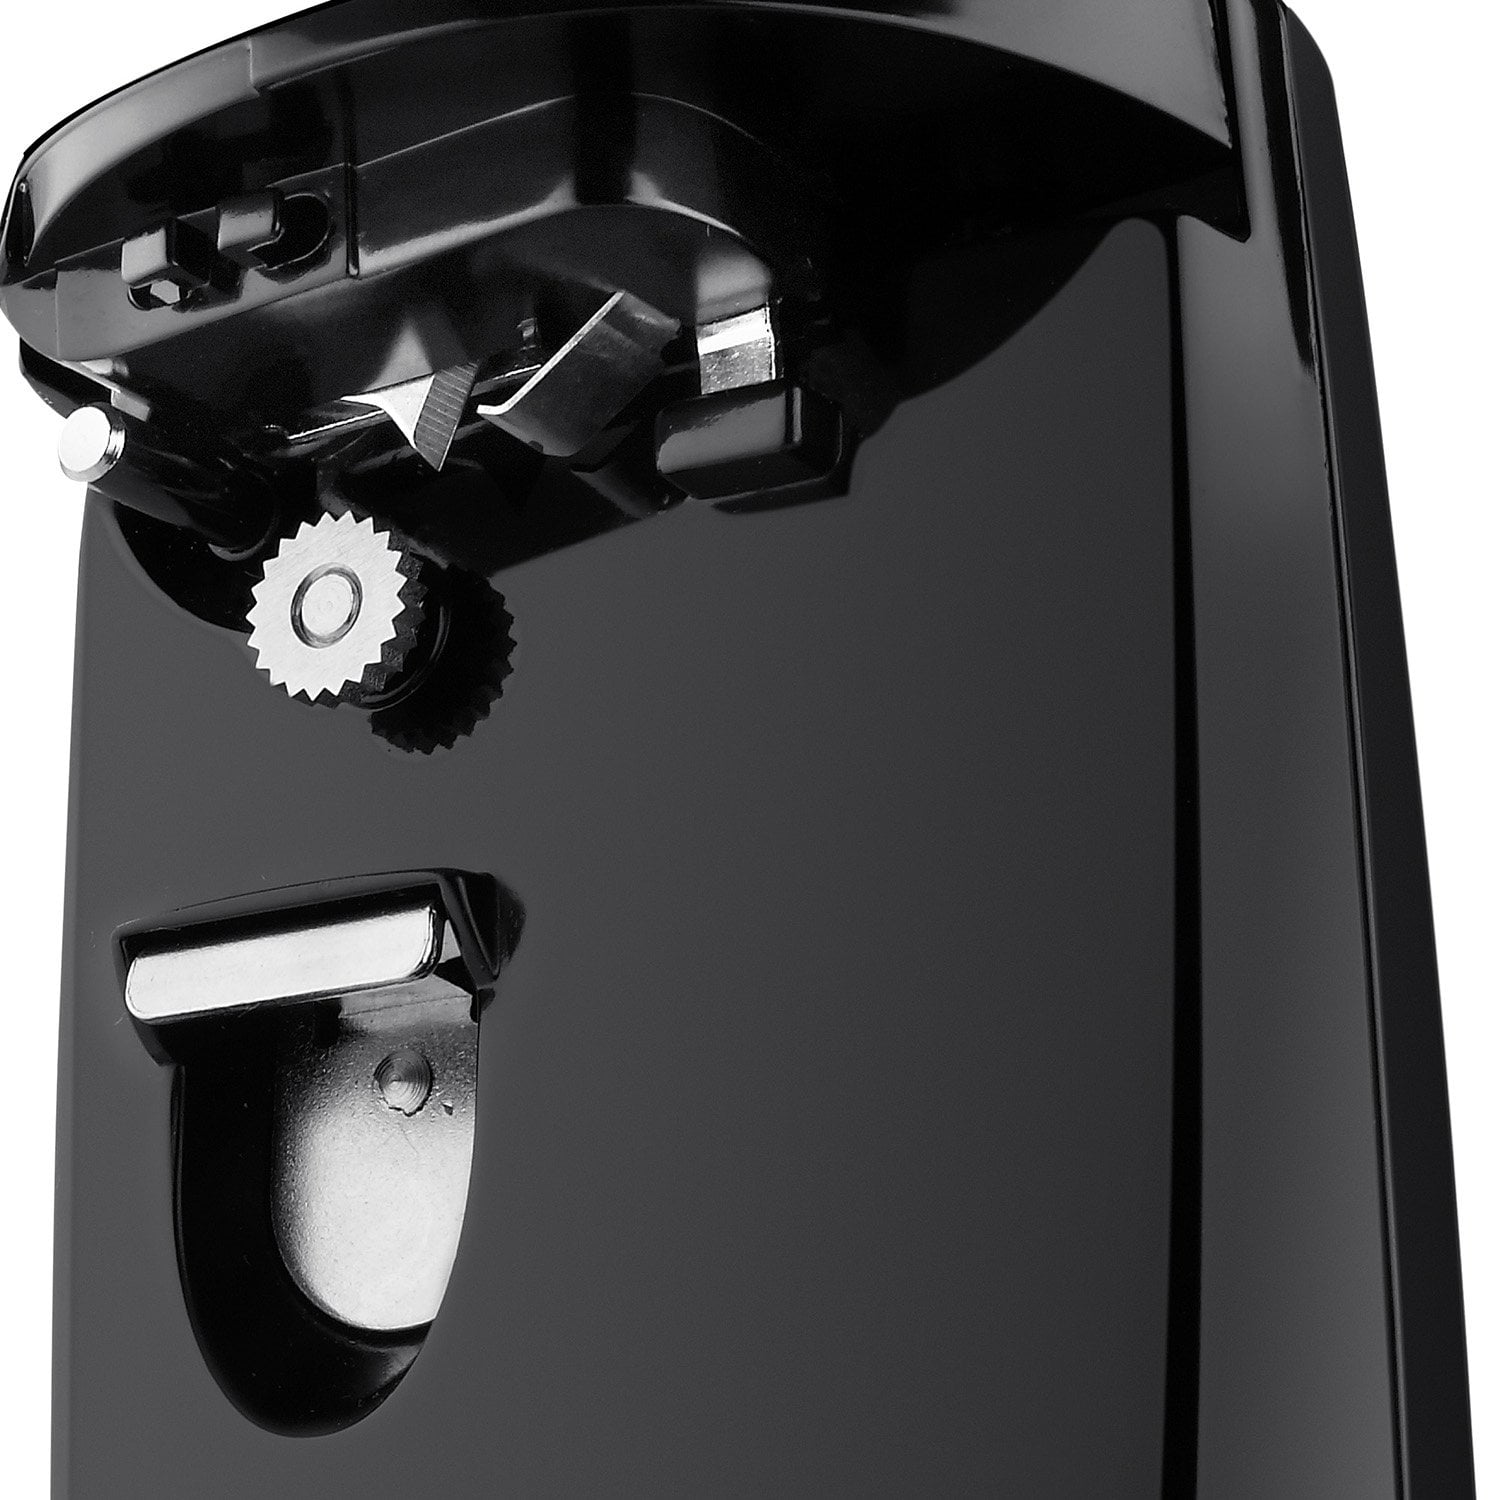 Black & Decker EC450 electric can opener